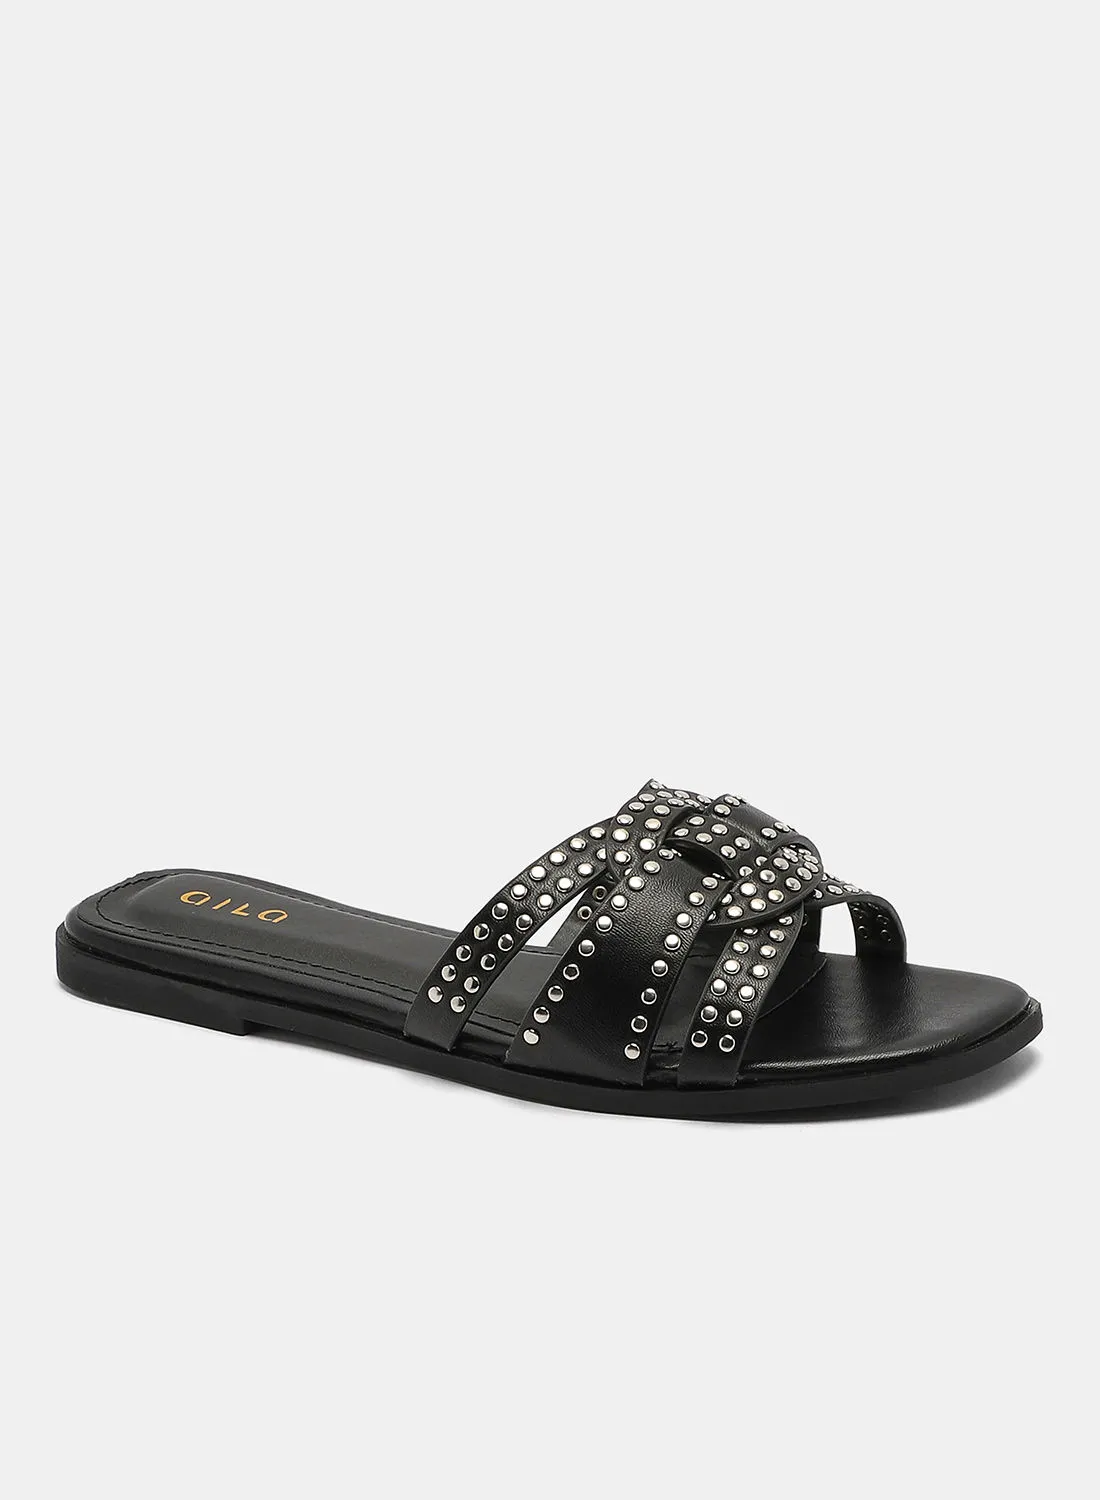 Aila Fashionable Casual Flat Sandals Black/Silver